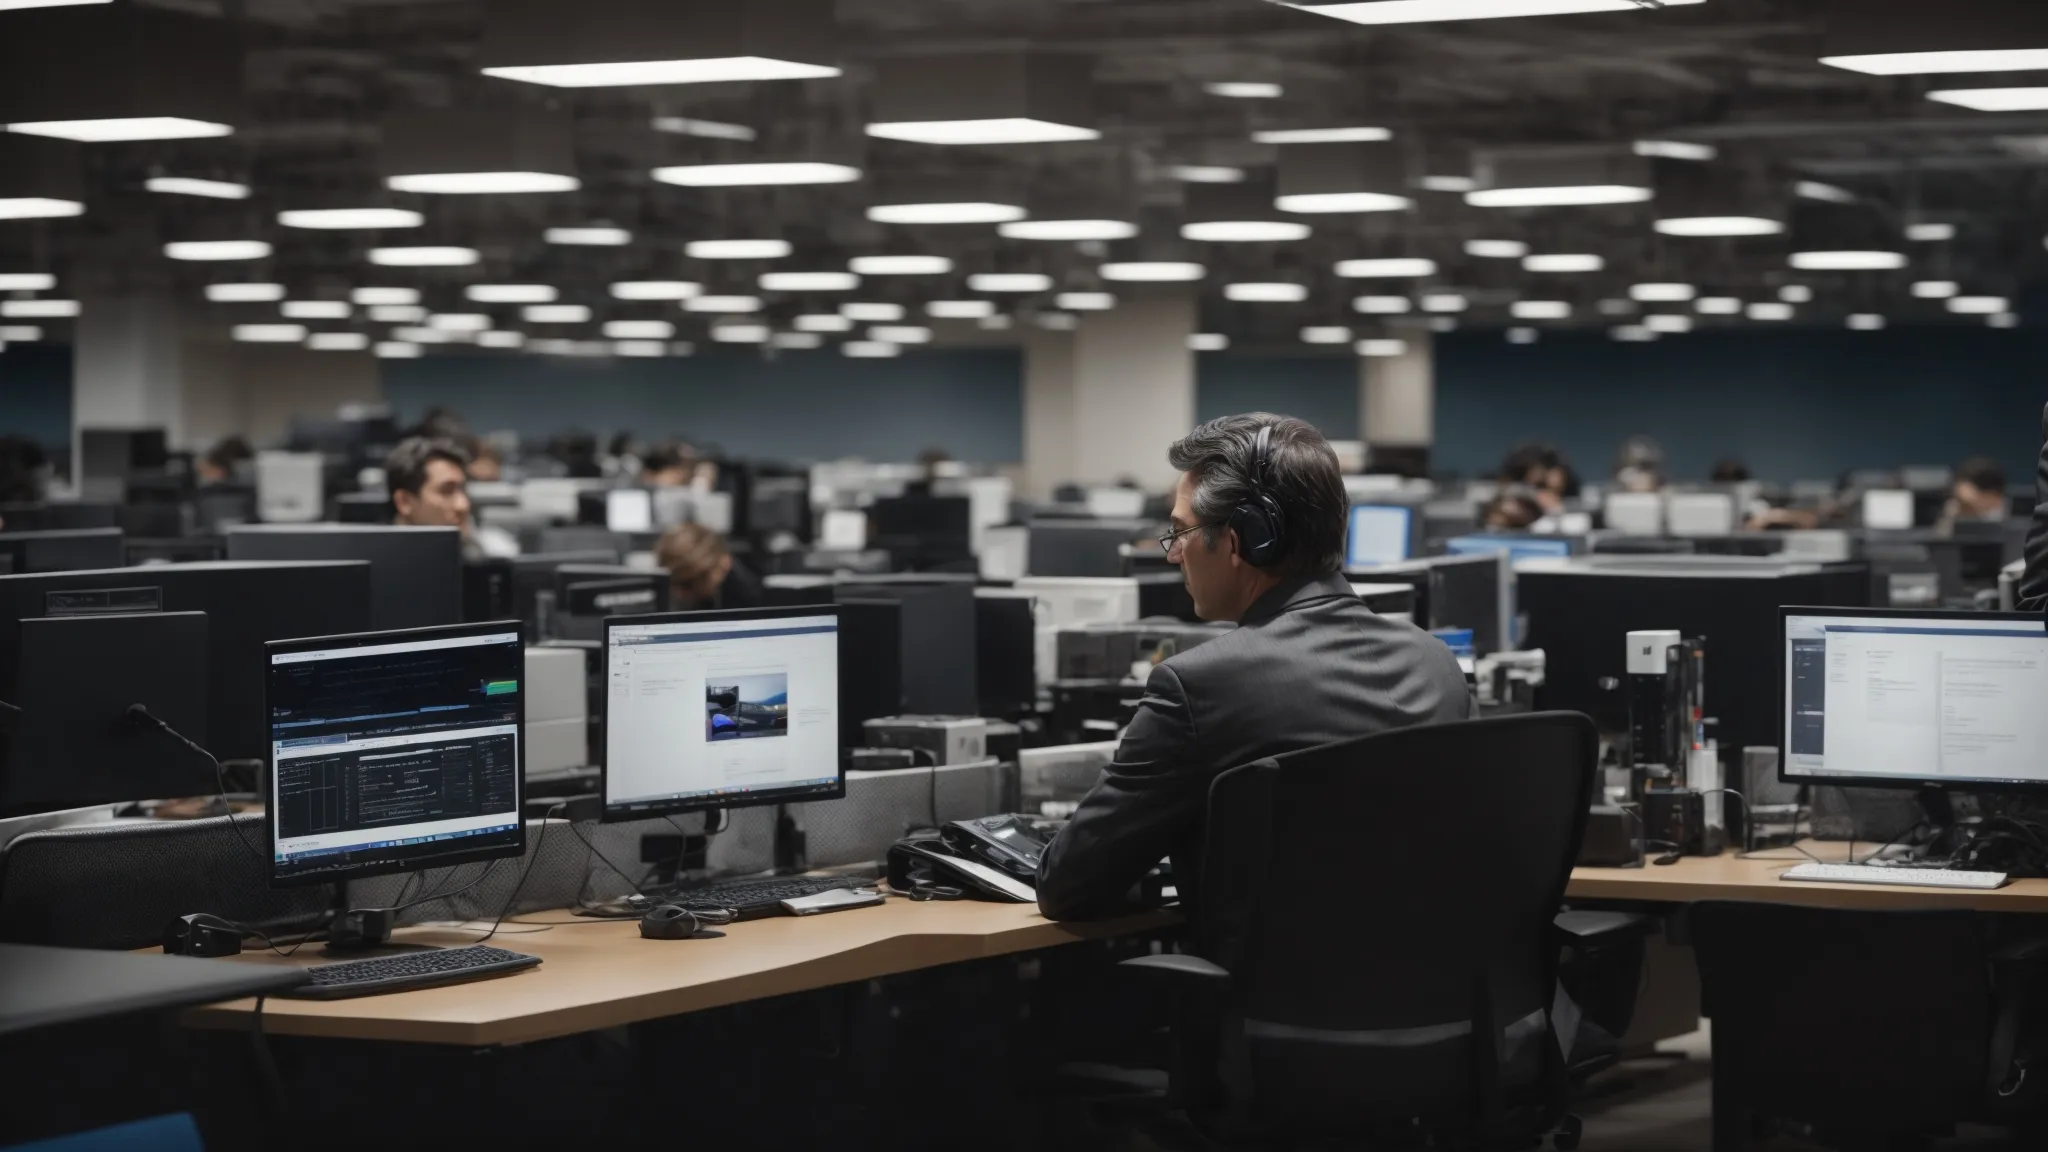 a tech journalist interviews google's john mueller amidst rows of computers in a modern office environment.